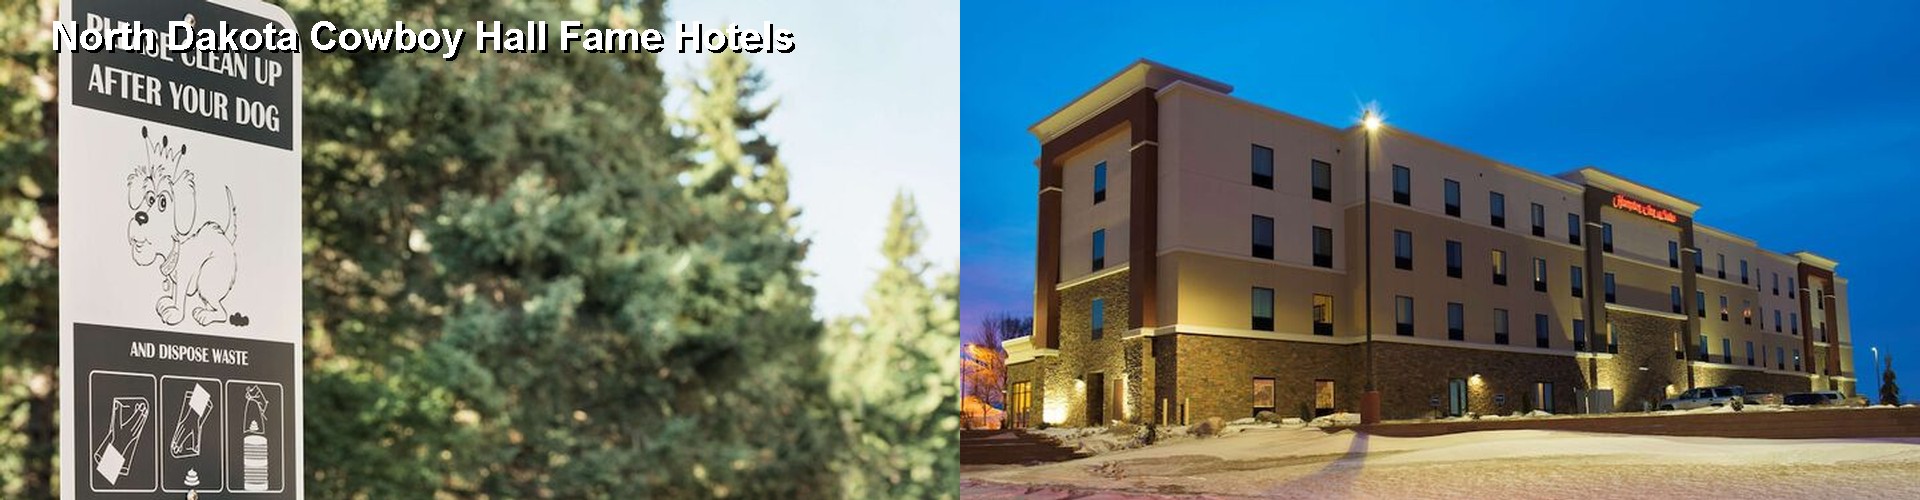 5 Best Hotels near North Dakota Cowboy Hall Fame